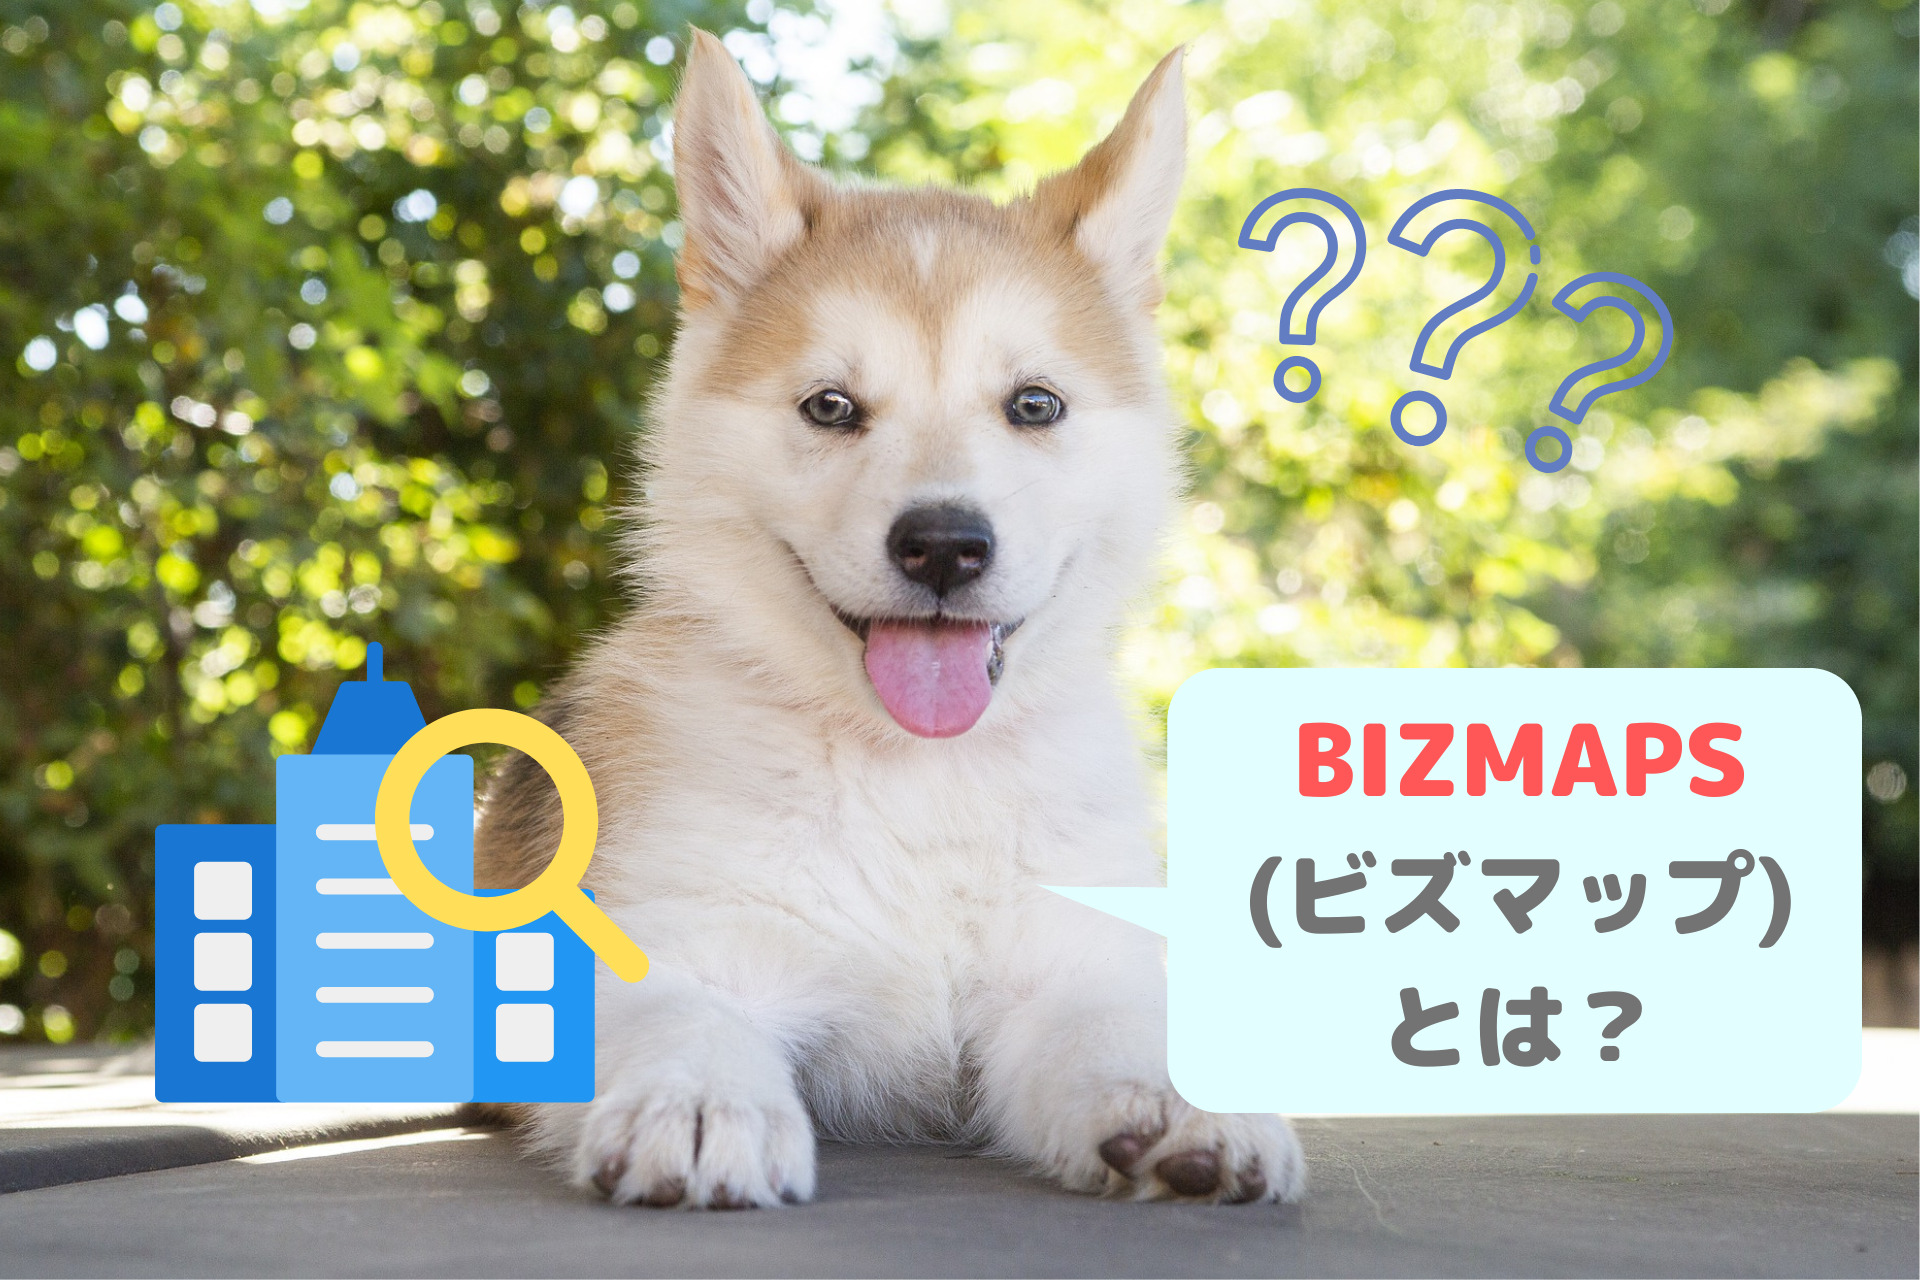 BIZMAPS(ビズマップ)とは？